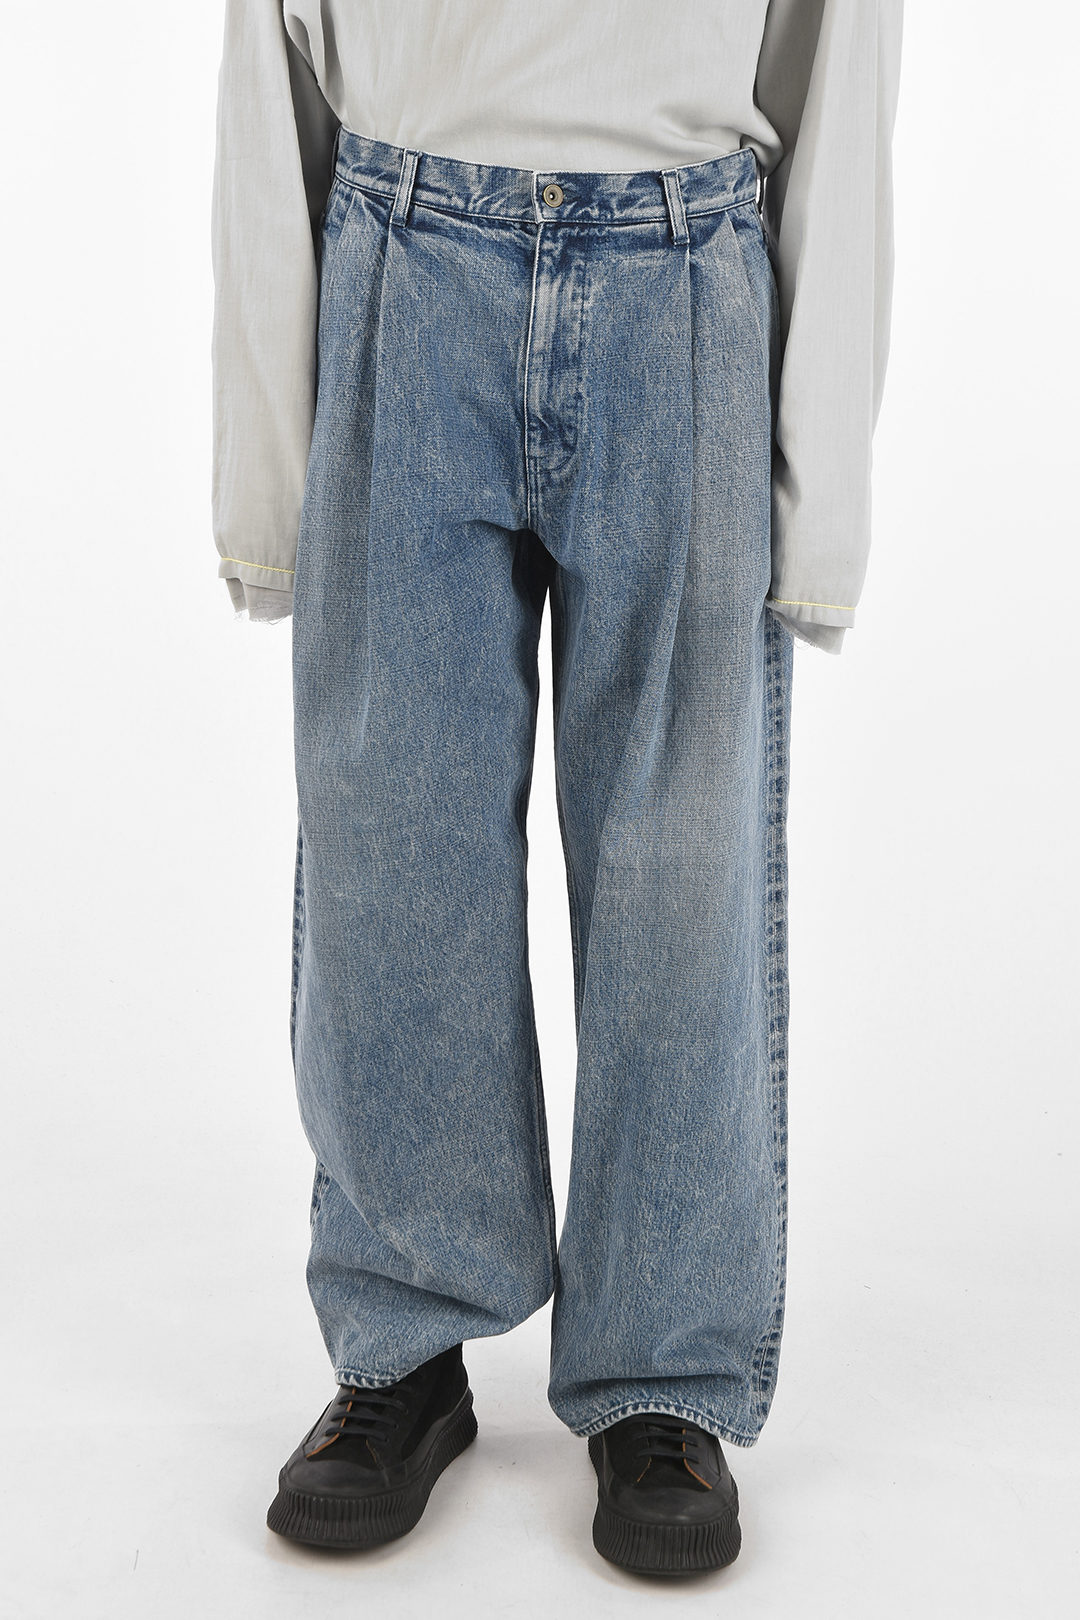 Federico Curradi NICK FOUQUET 28cm double pleat wide jeans men ...